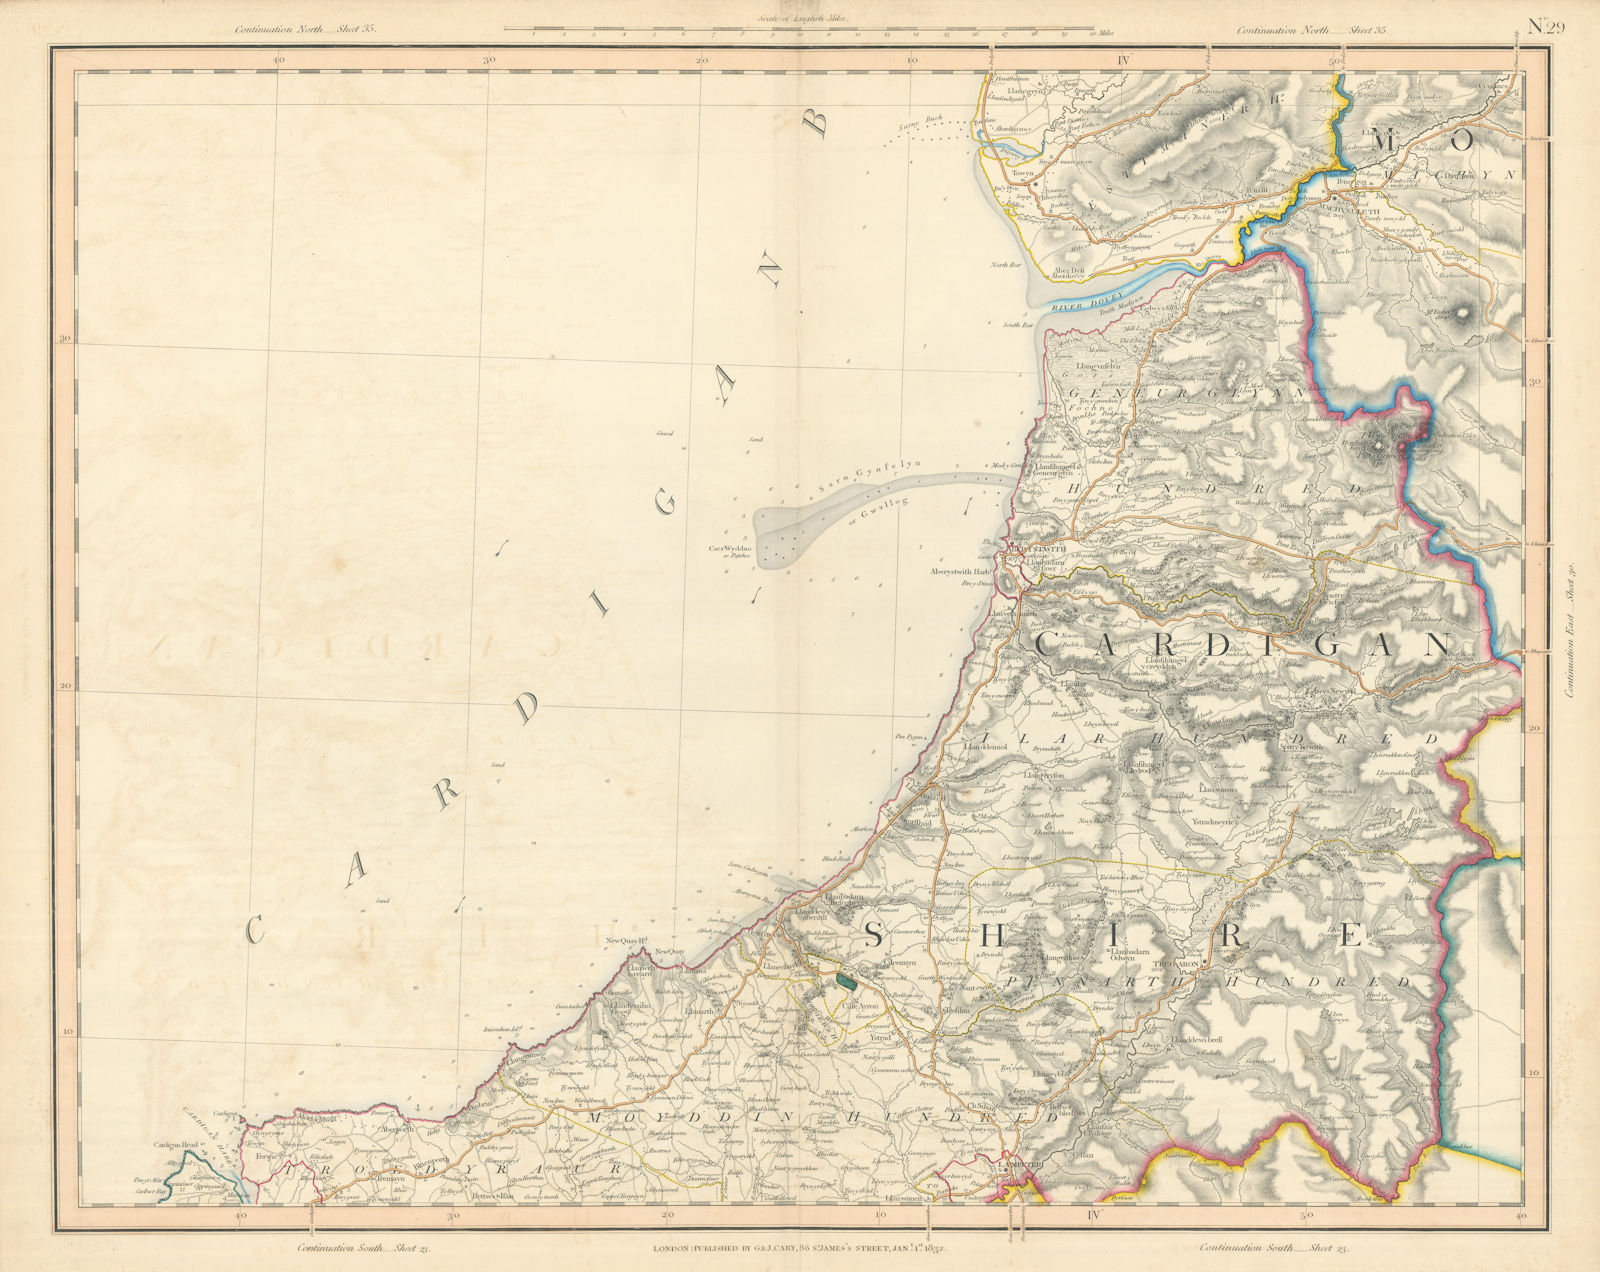 CARDIGAN BAY. Cardiganshire, South Merionethshire. River Dyfi. CARY 1832 map